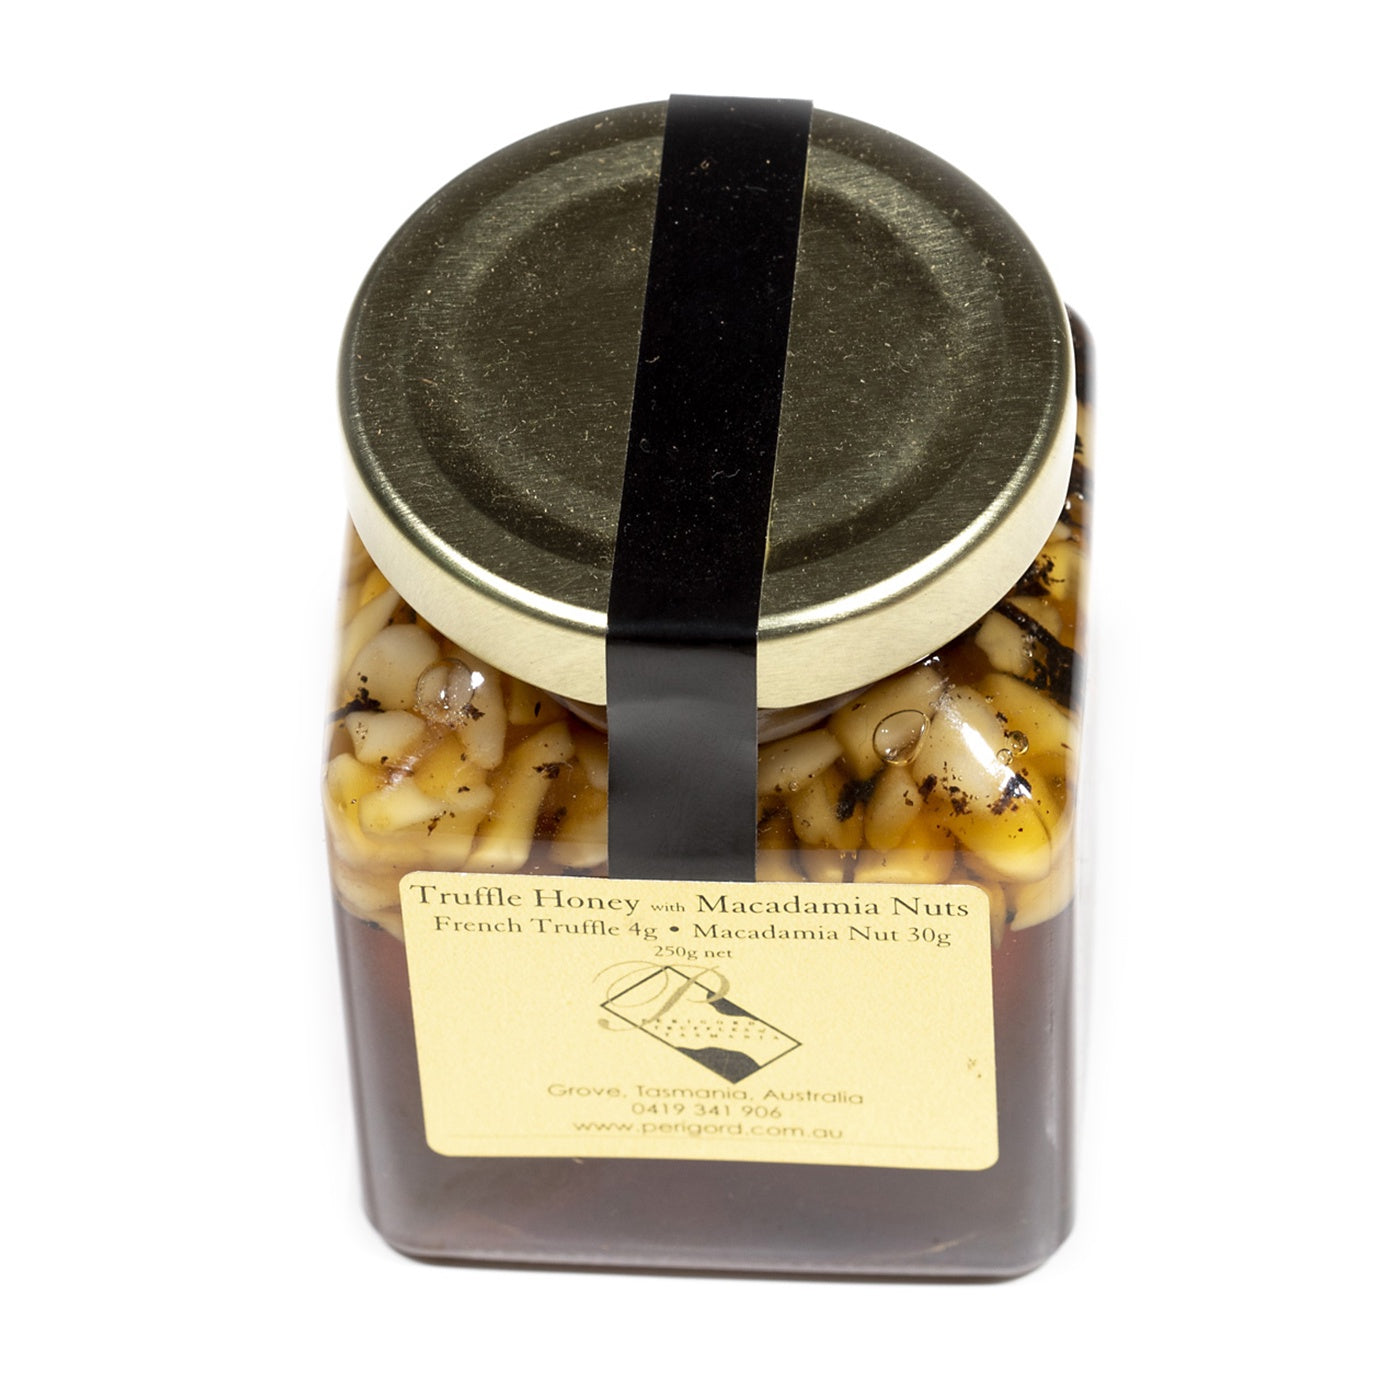 Perigord Truffles of Tasmania - Truffle Honey with Macadamia Nuts - 250g